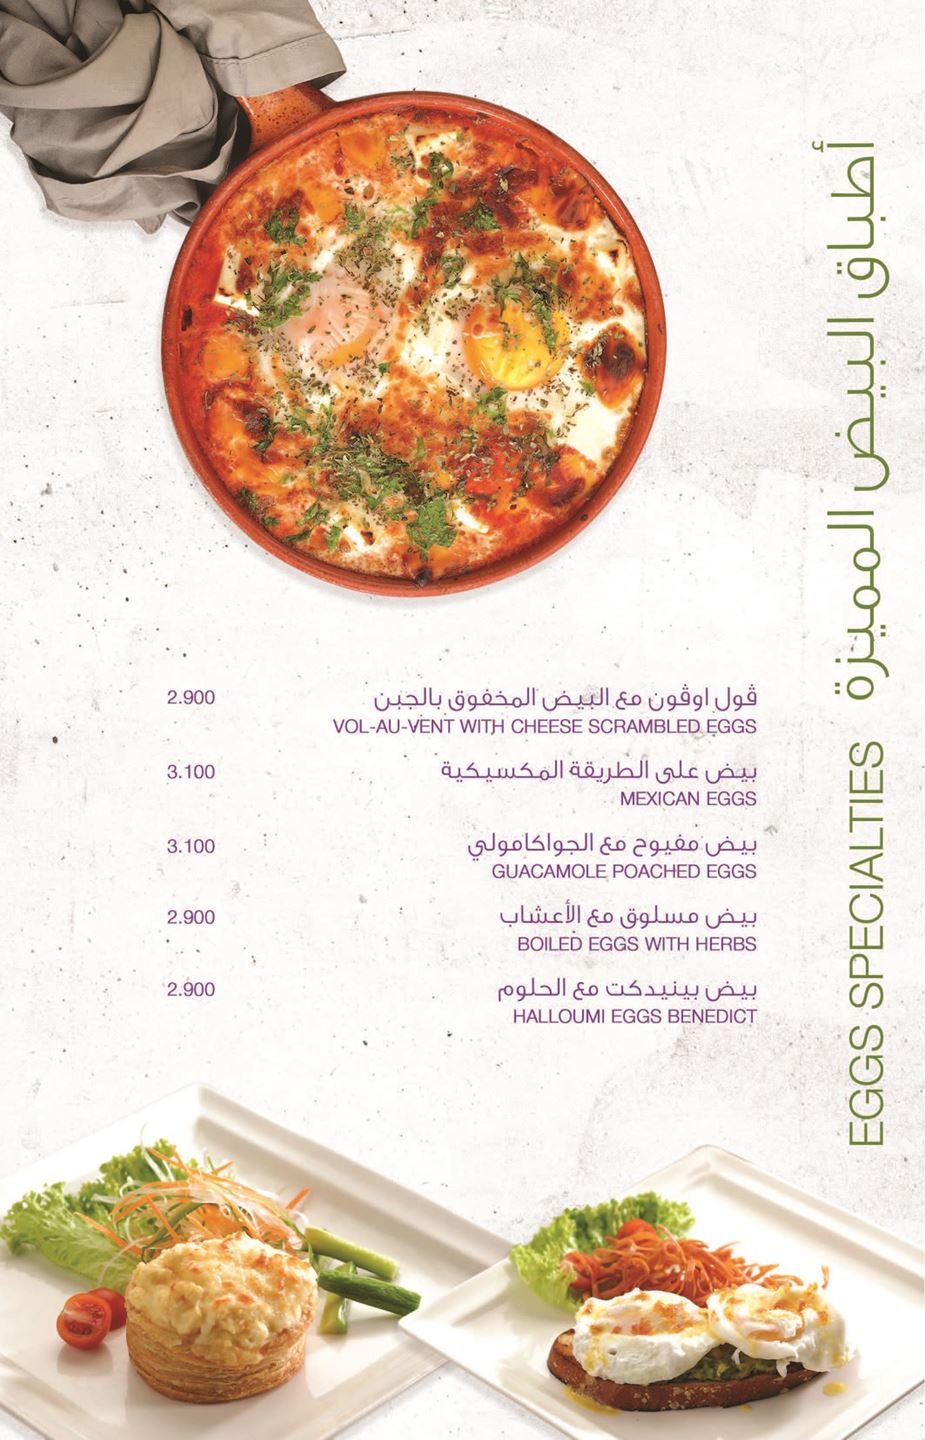 Villa Fayrouz New Breakfast Menu with Special Choices